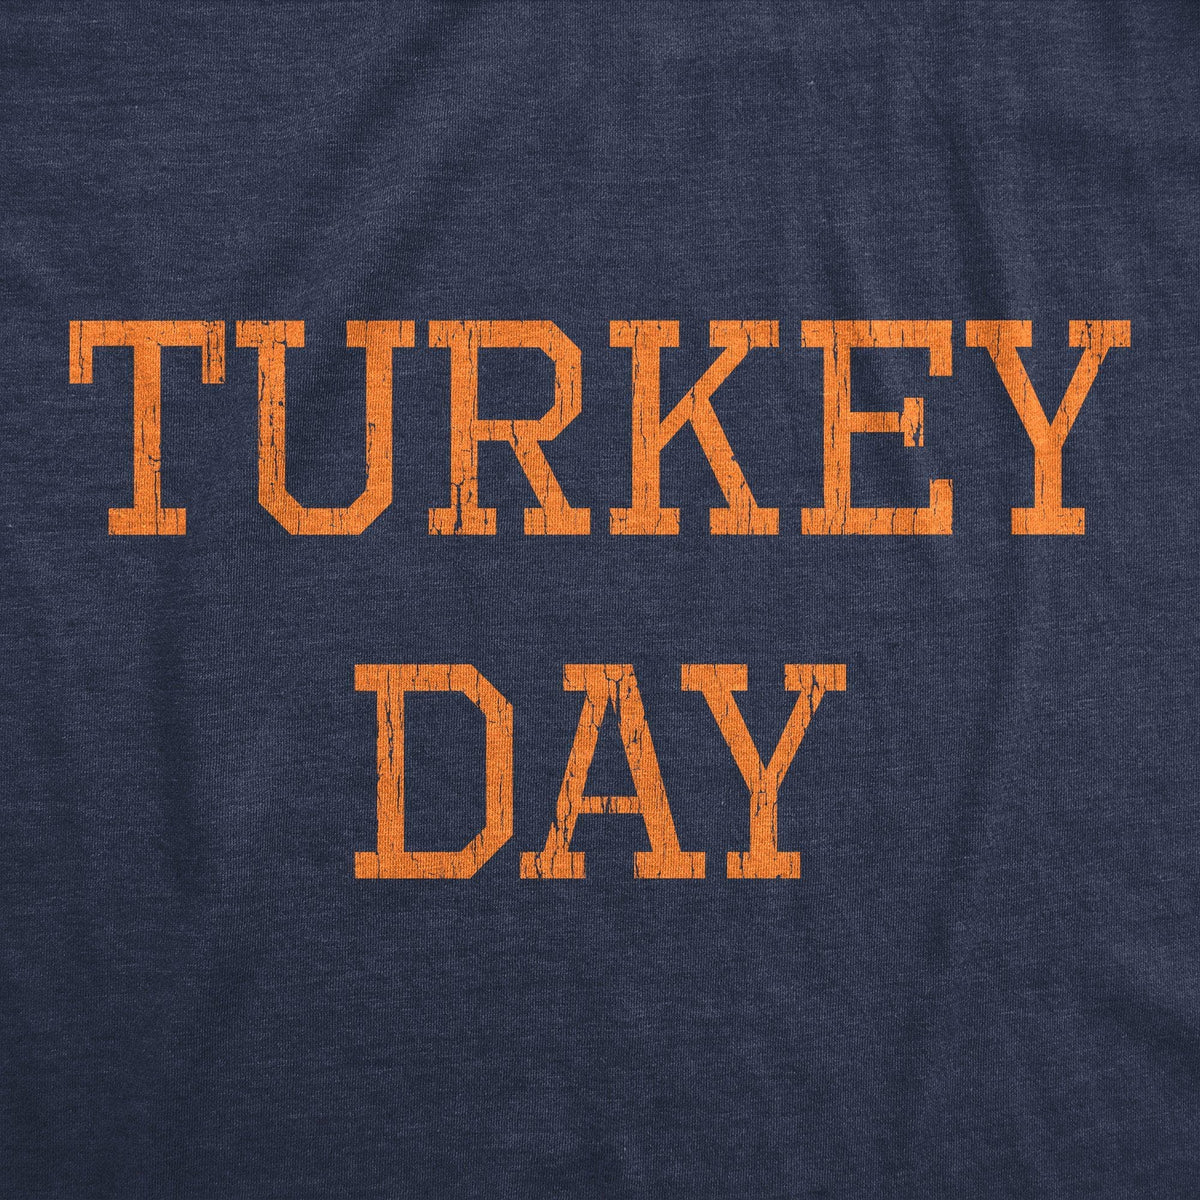 Turkey Day Women&#39;s Tshirt - Crazy Dog T-Shirts